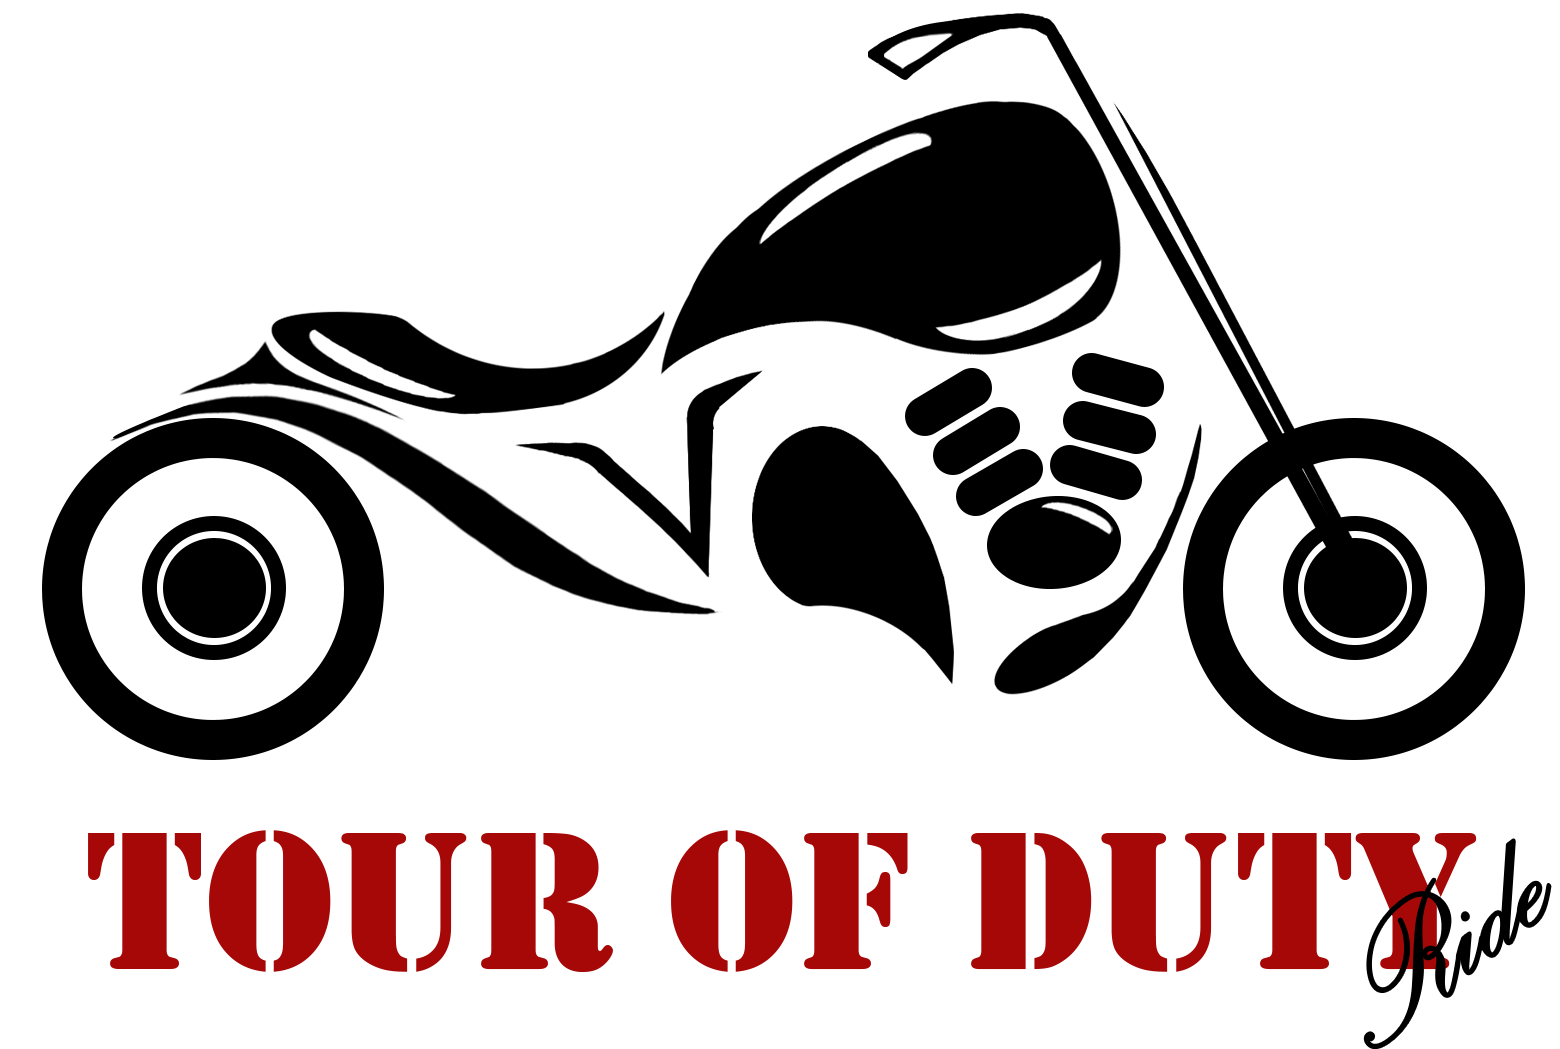 Ride Logo - Tour of Duty Assistance Mission